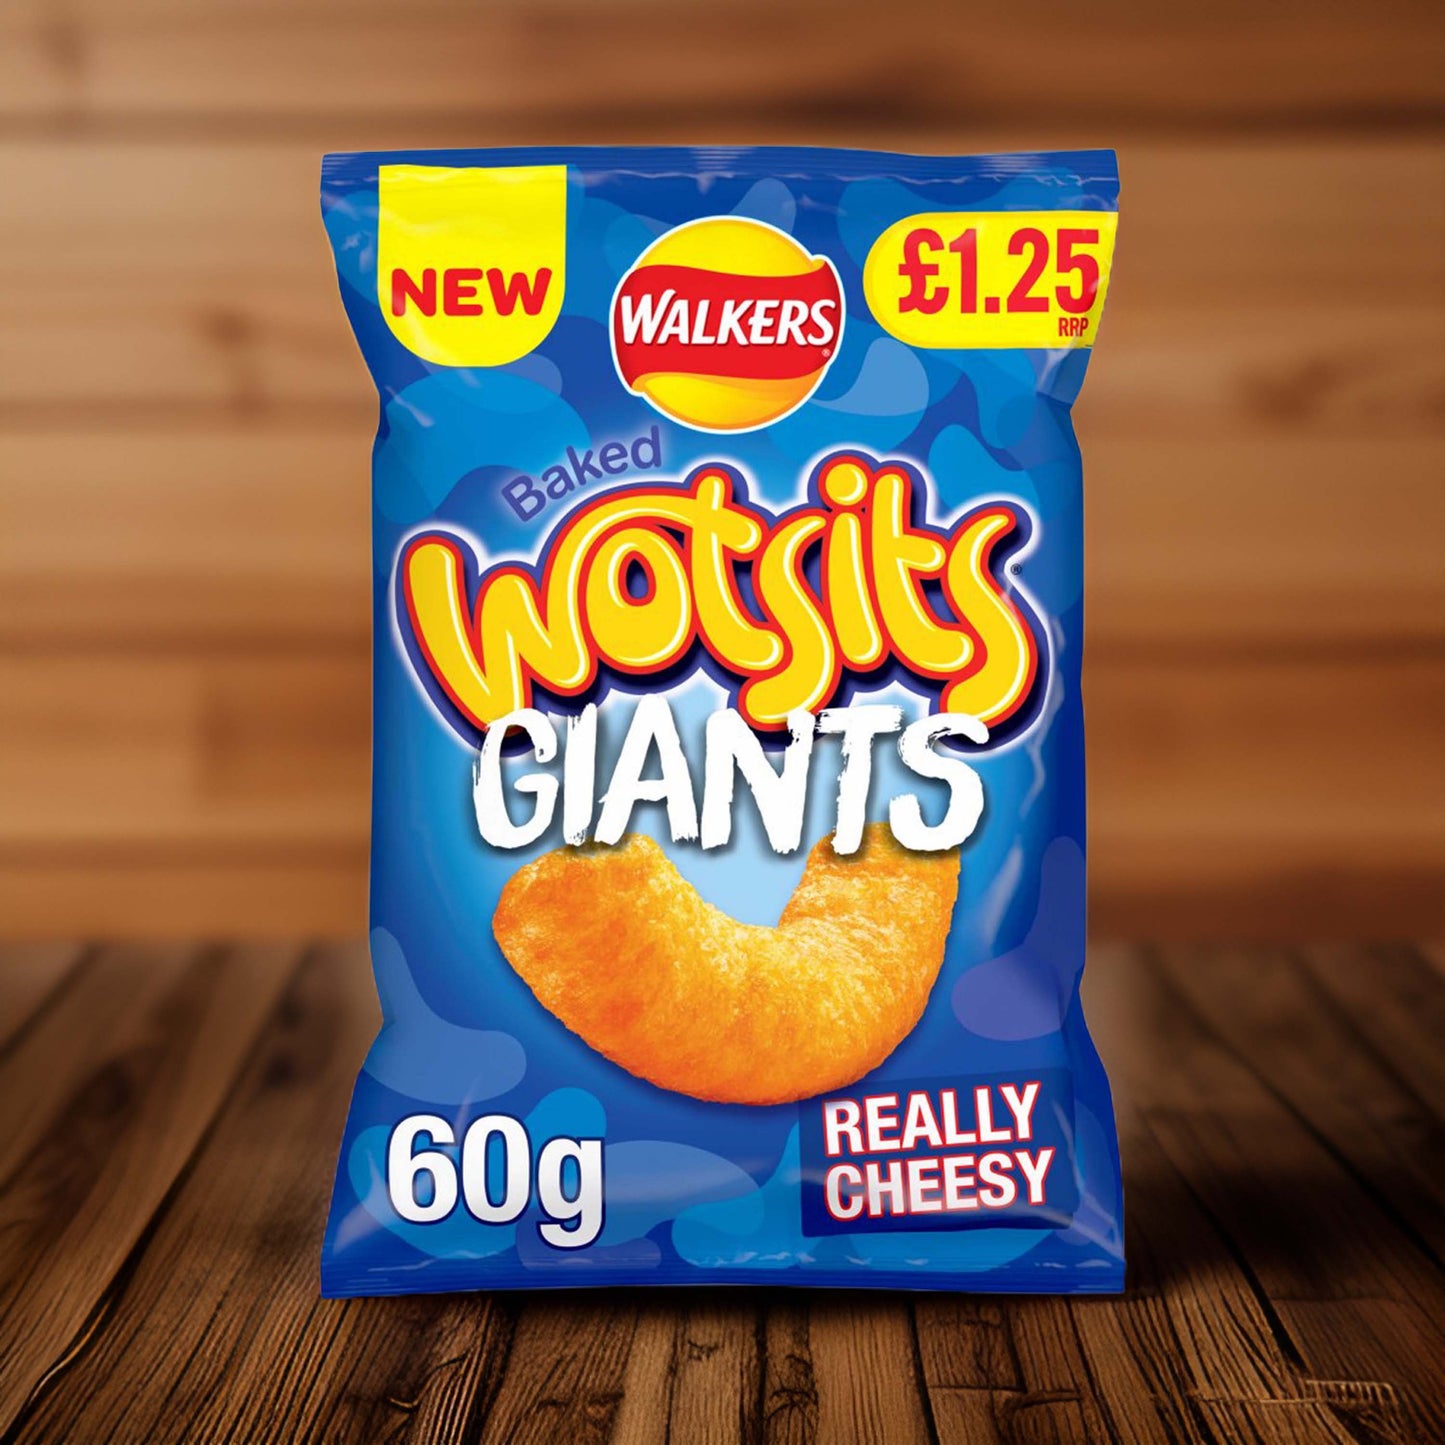 Wotsits Giants Really Cheesy 60g – (£1.25 Bag) - British Crisps